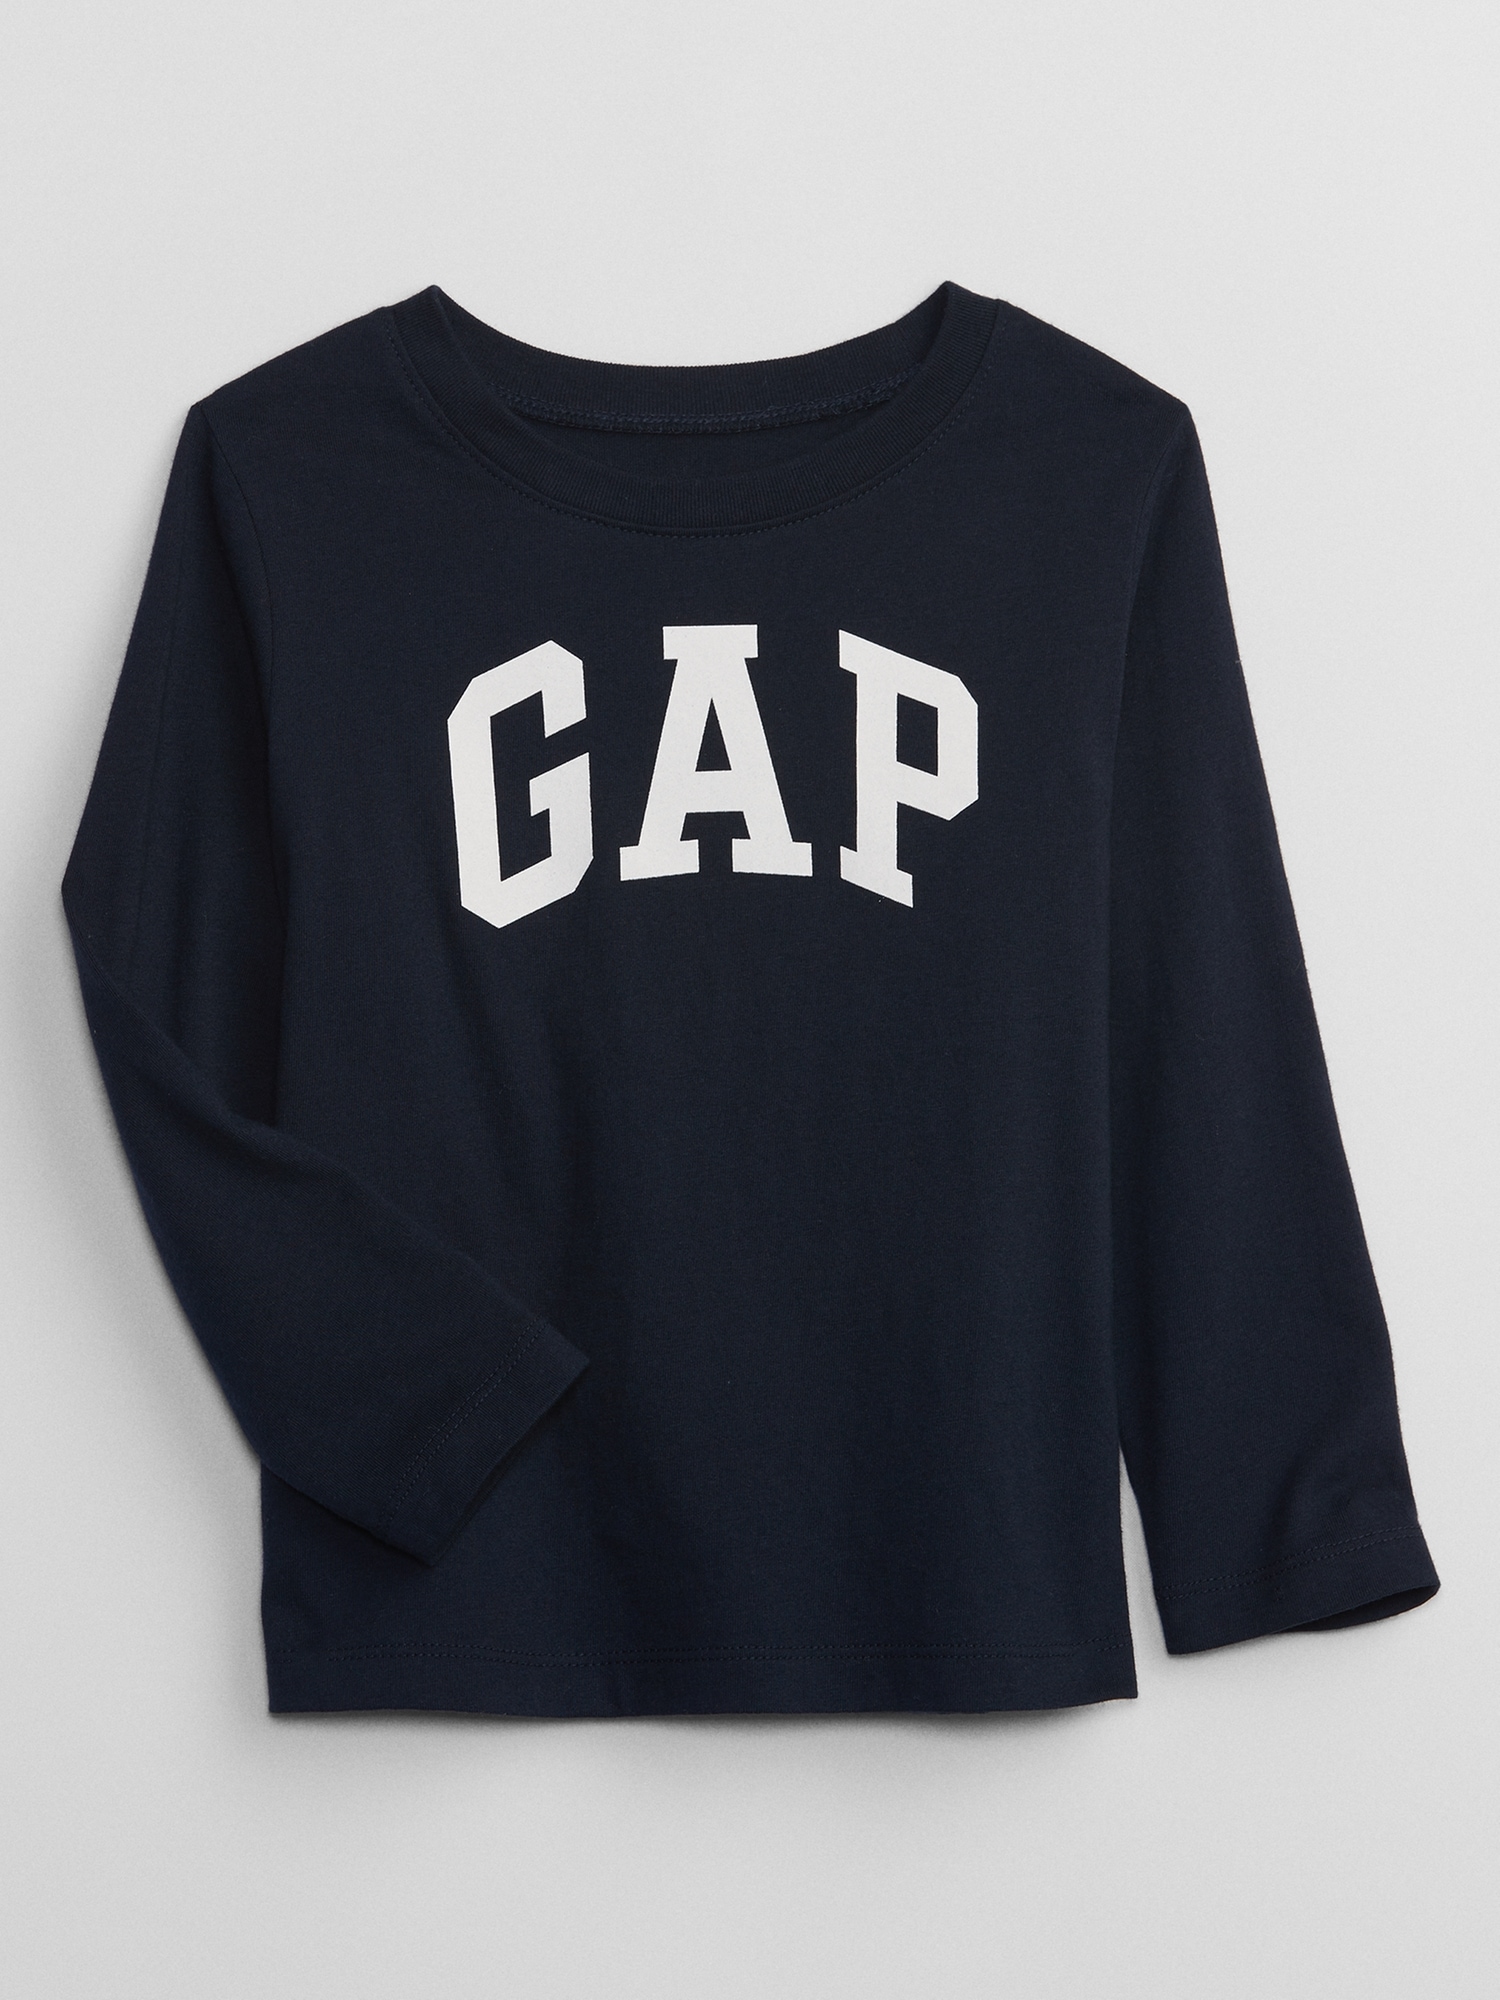 babyGap Graphic T-Shirt | Gap Factory